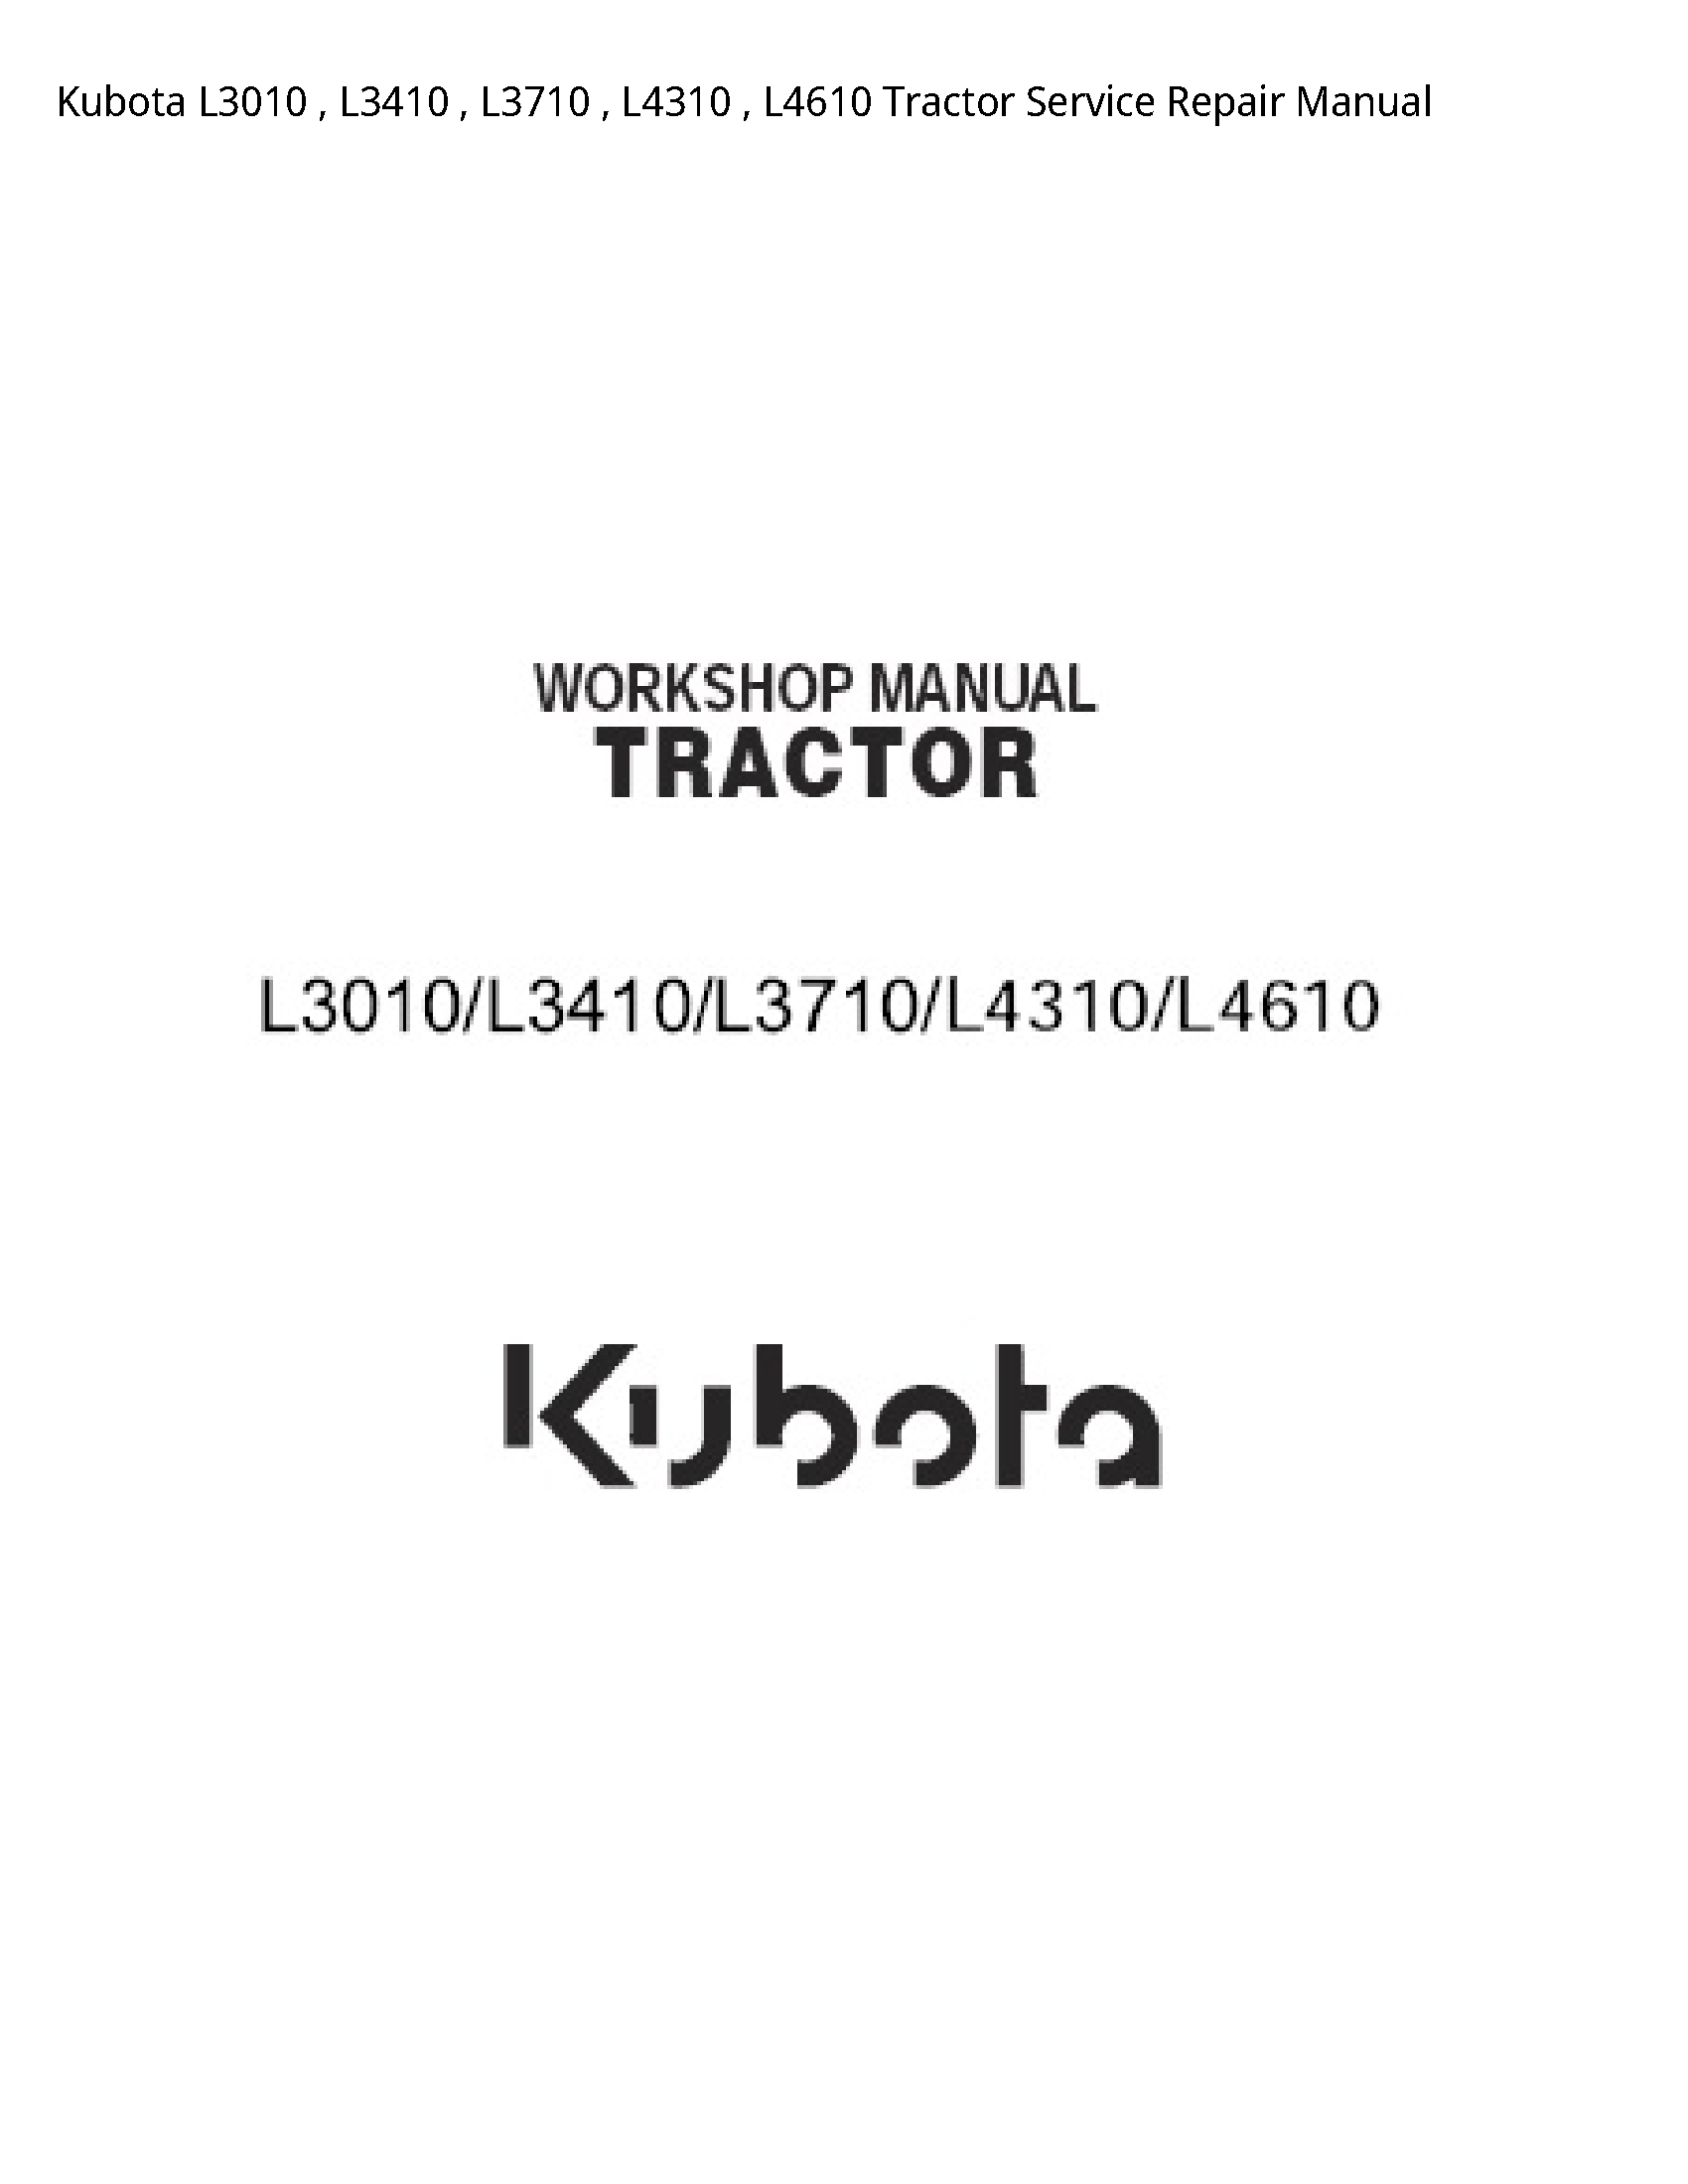 Kubota L3010 Tractor manual